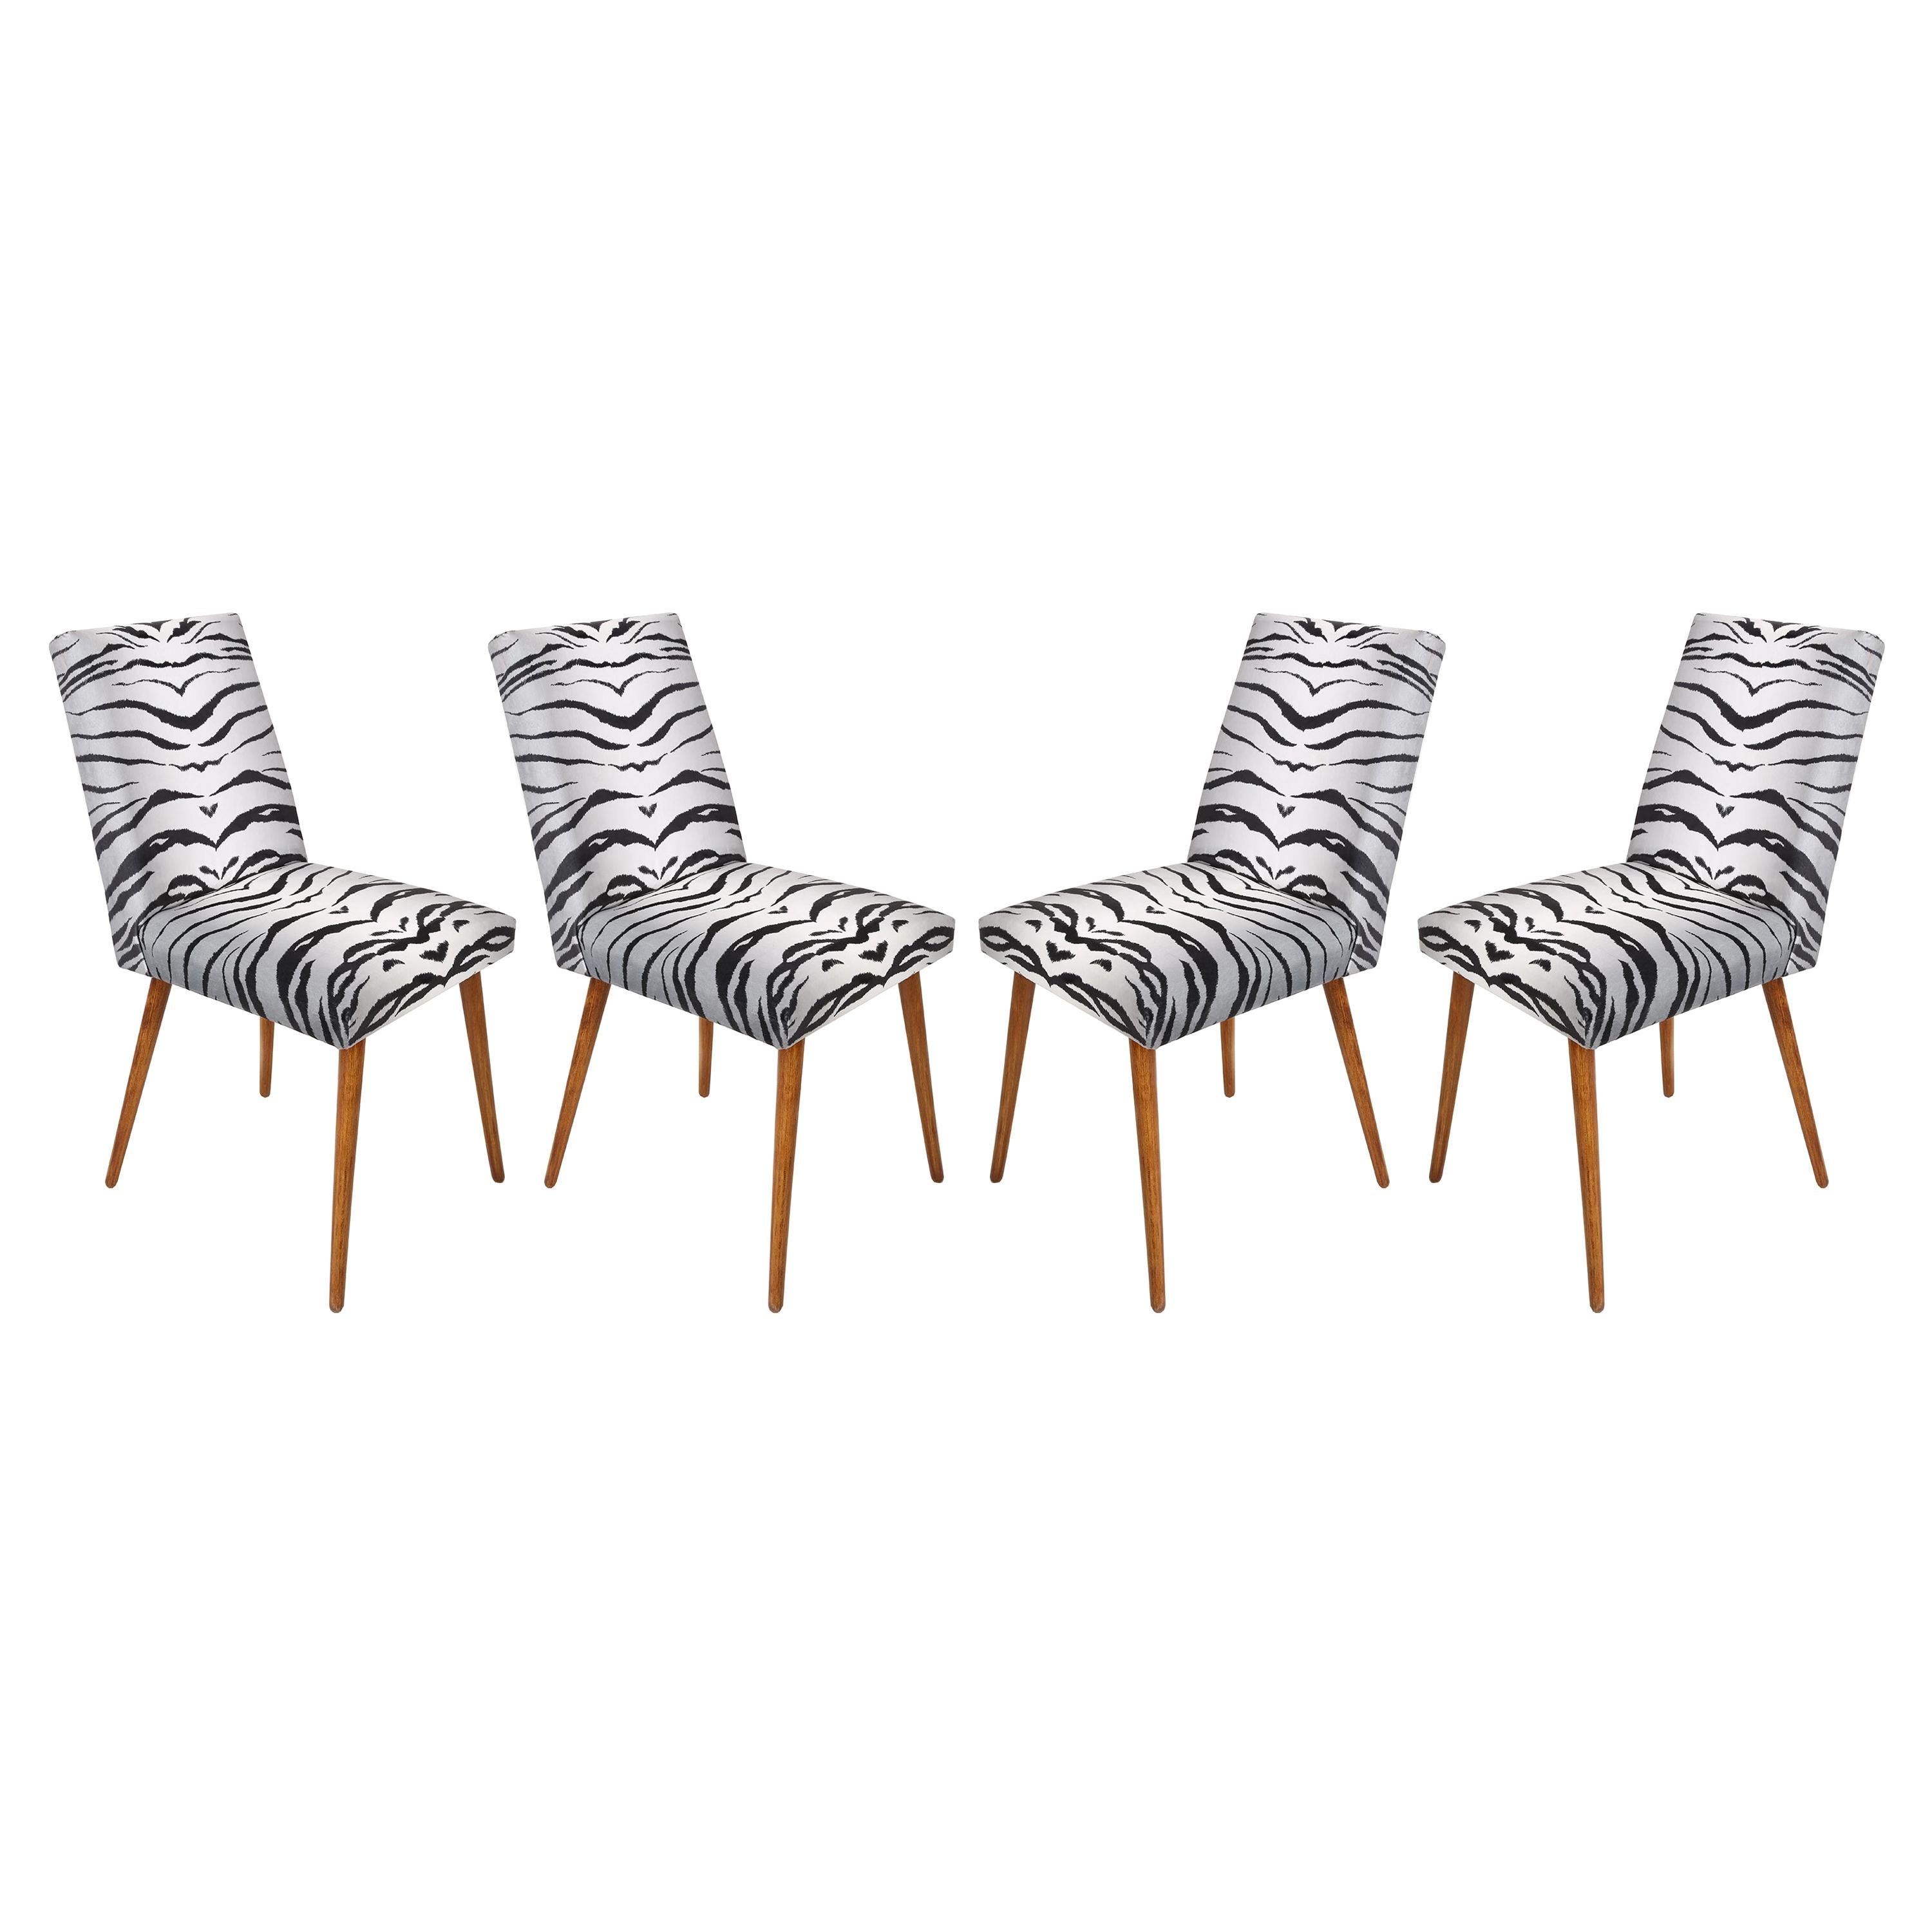 Set of Four 20th Century Black and White Zebra Velvet Chairs, Europe, 1960s